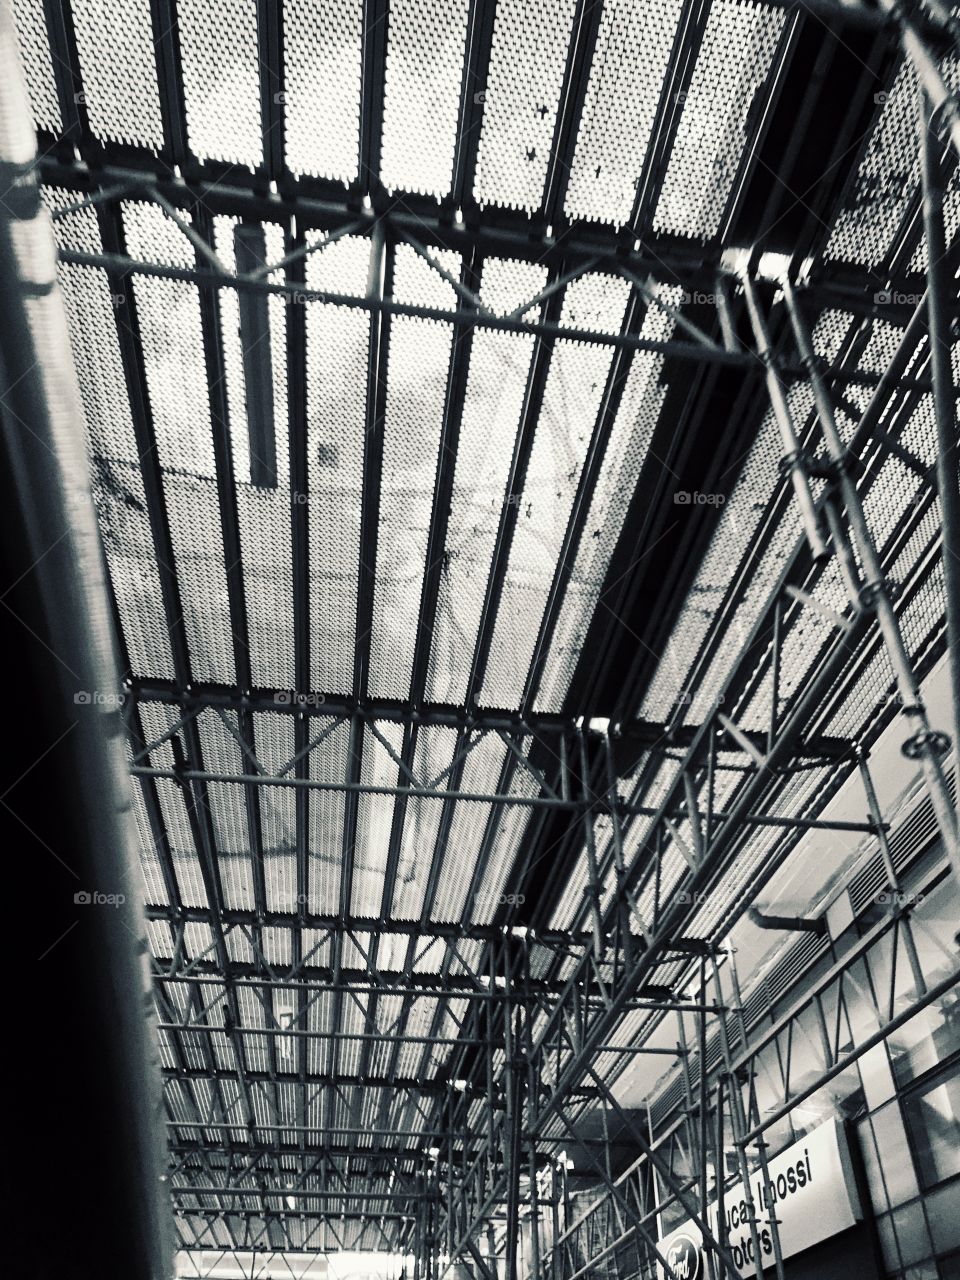 #buildingworks #works #ceiling #outside #scaffolding 